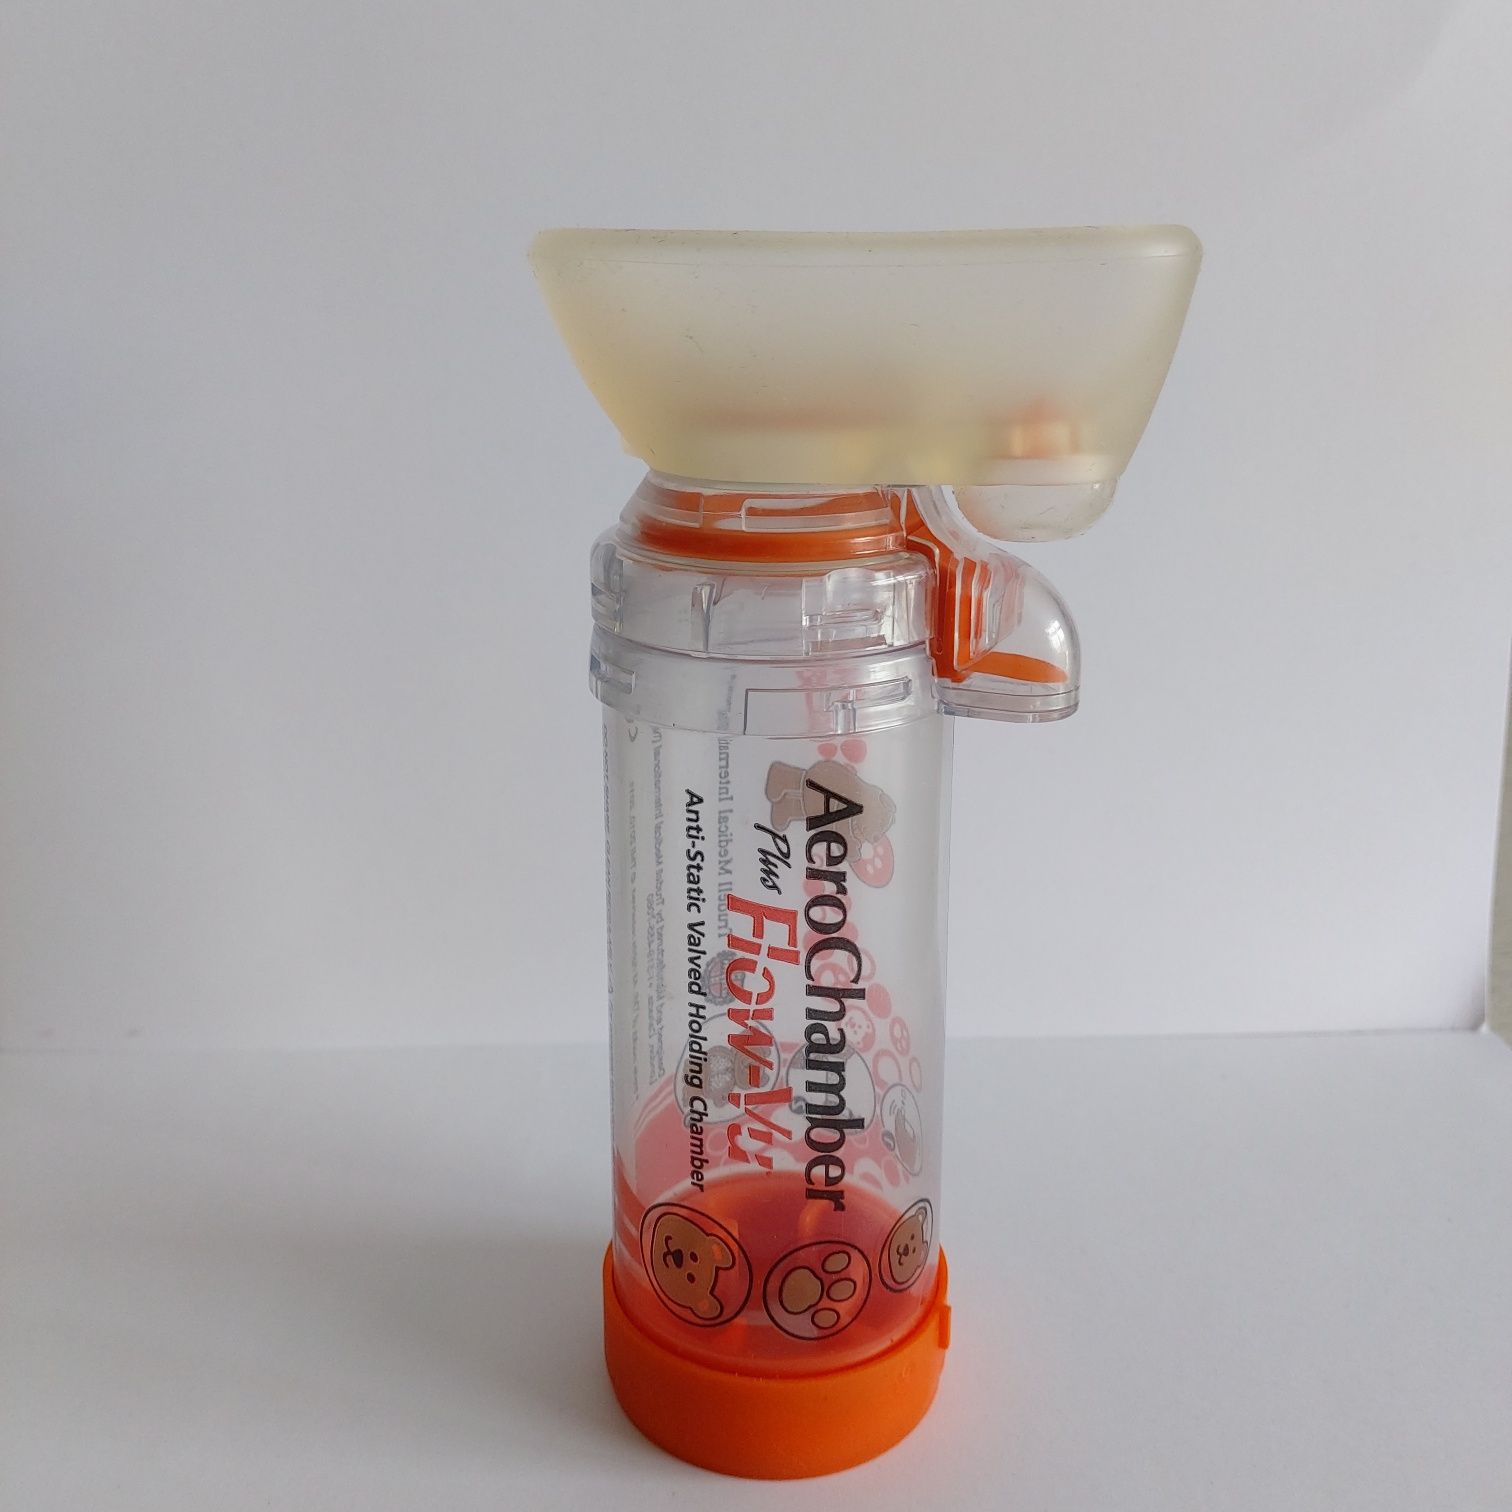 AeroChamber Plus Flow-Vu inhalator dla niemowląt komora inhalacyjna